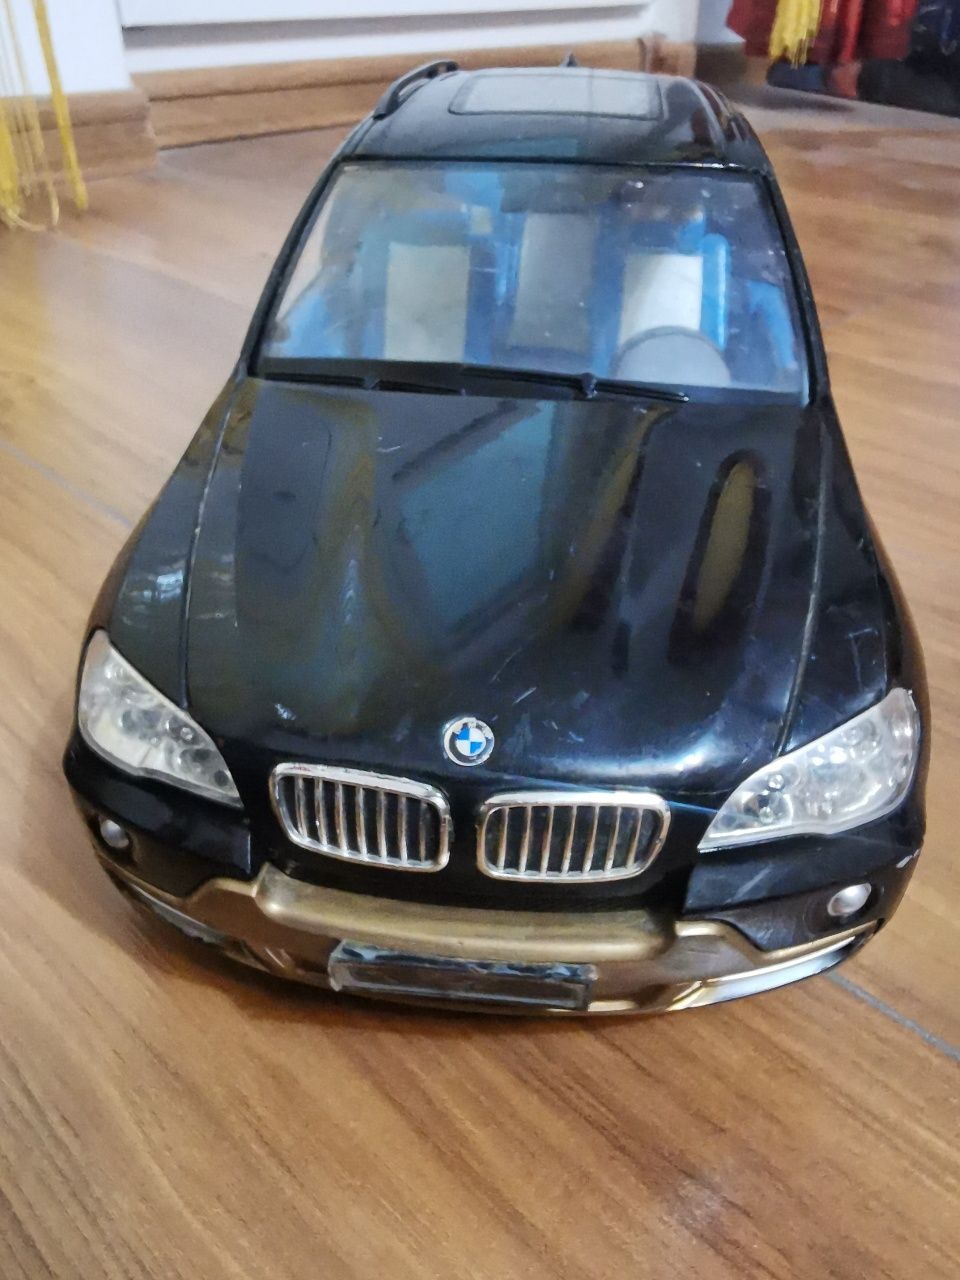 Masinuta BMW X5 de 34 cm